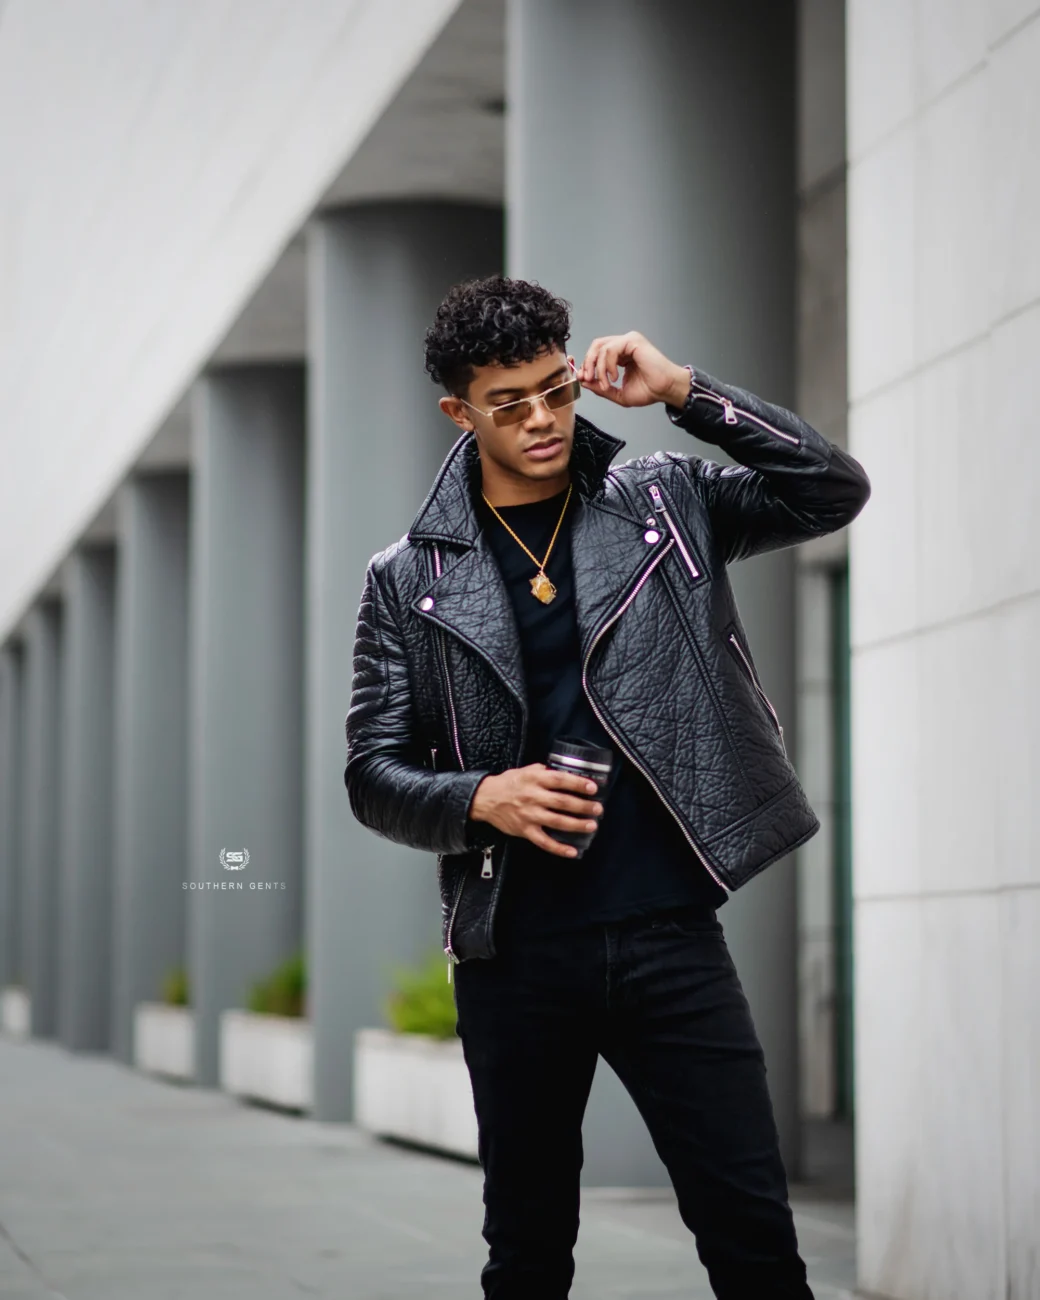 fashionable ways to style a leather jacket